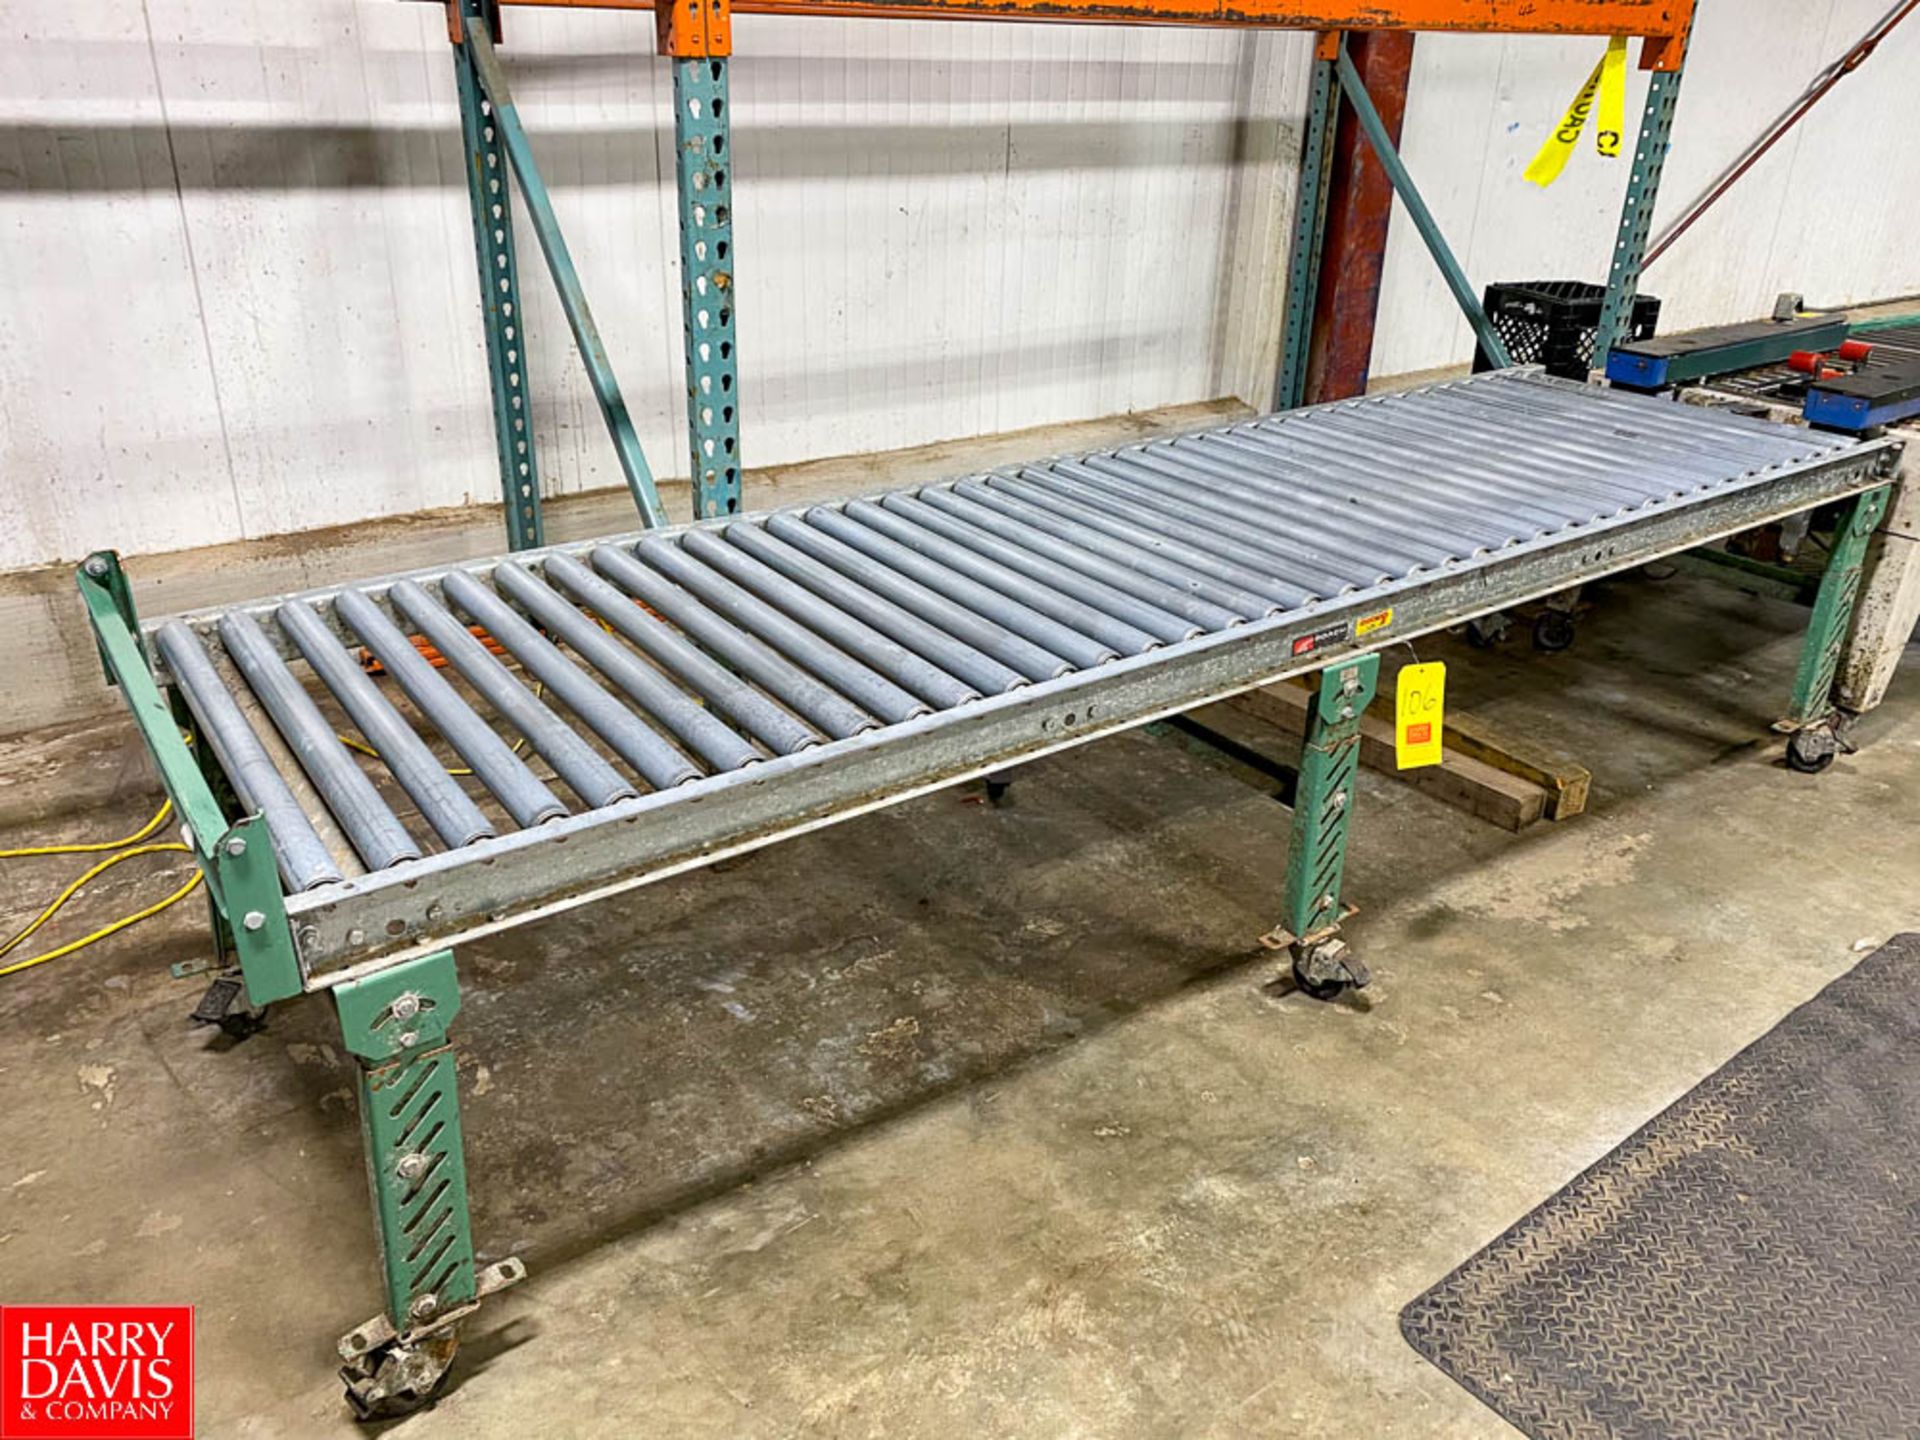 10' x 31" Roller Conveyor - Rigging Fee $150